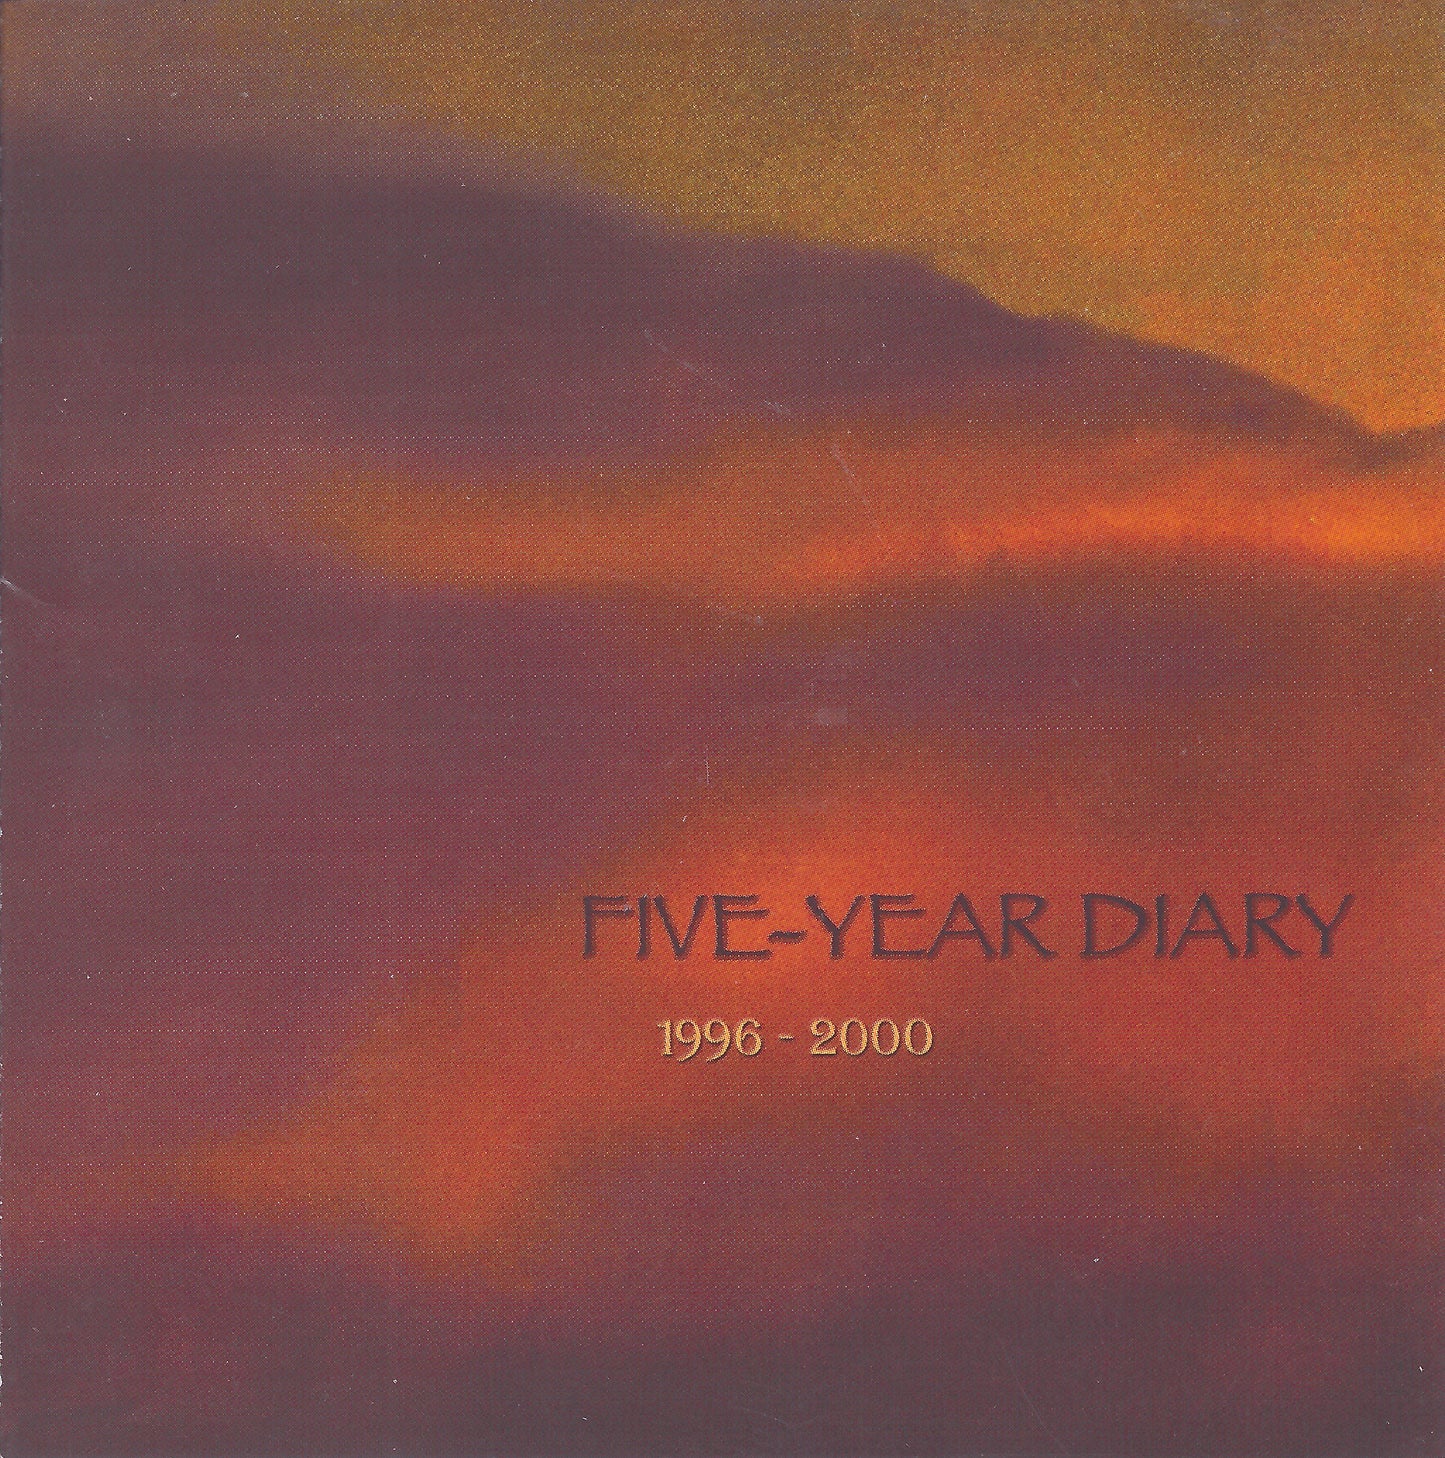 Five Year Diary (Prelude) (Live) - Chamberlain